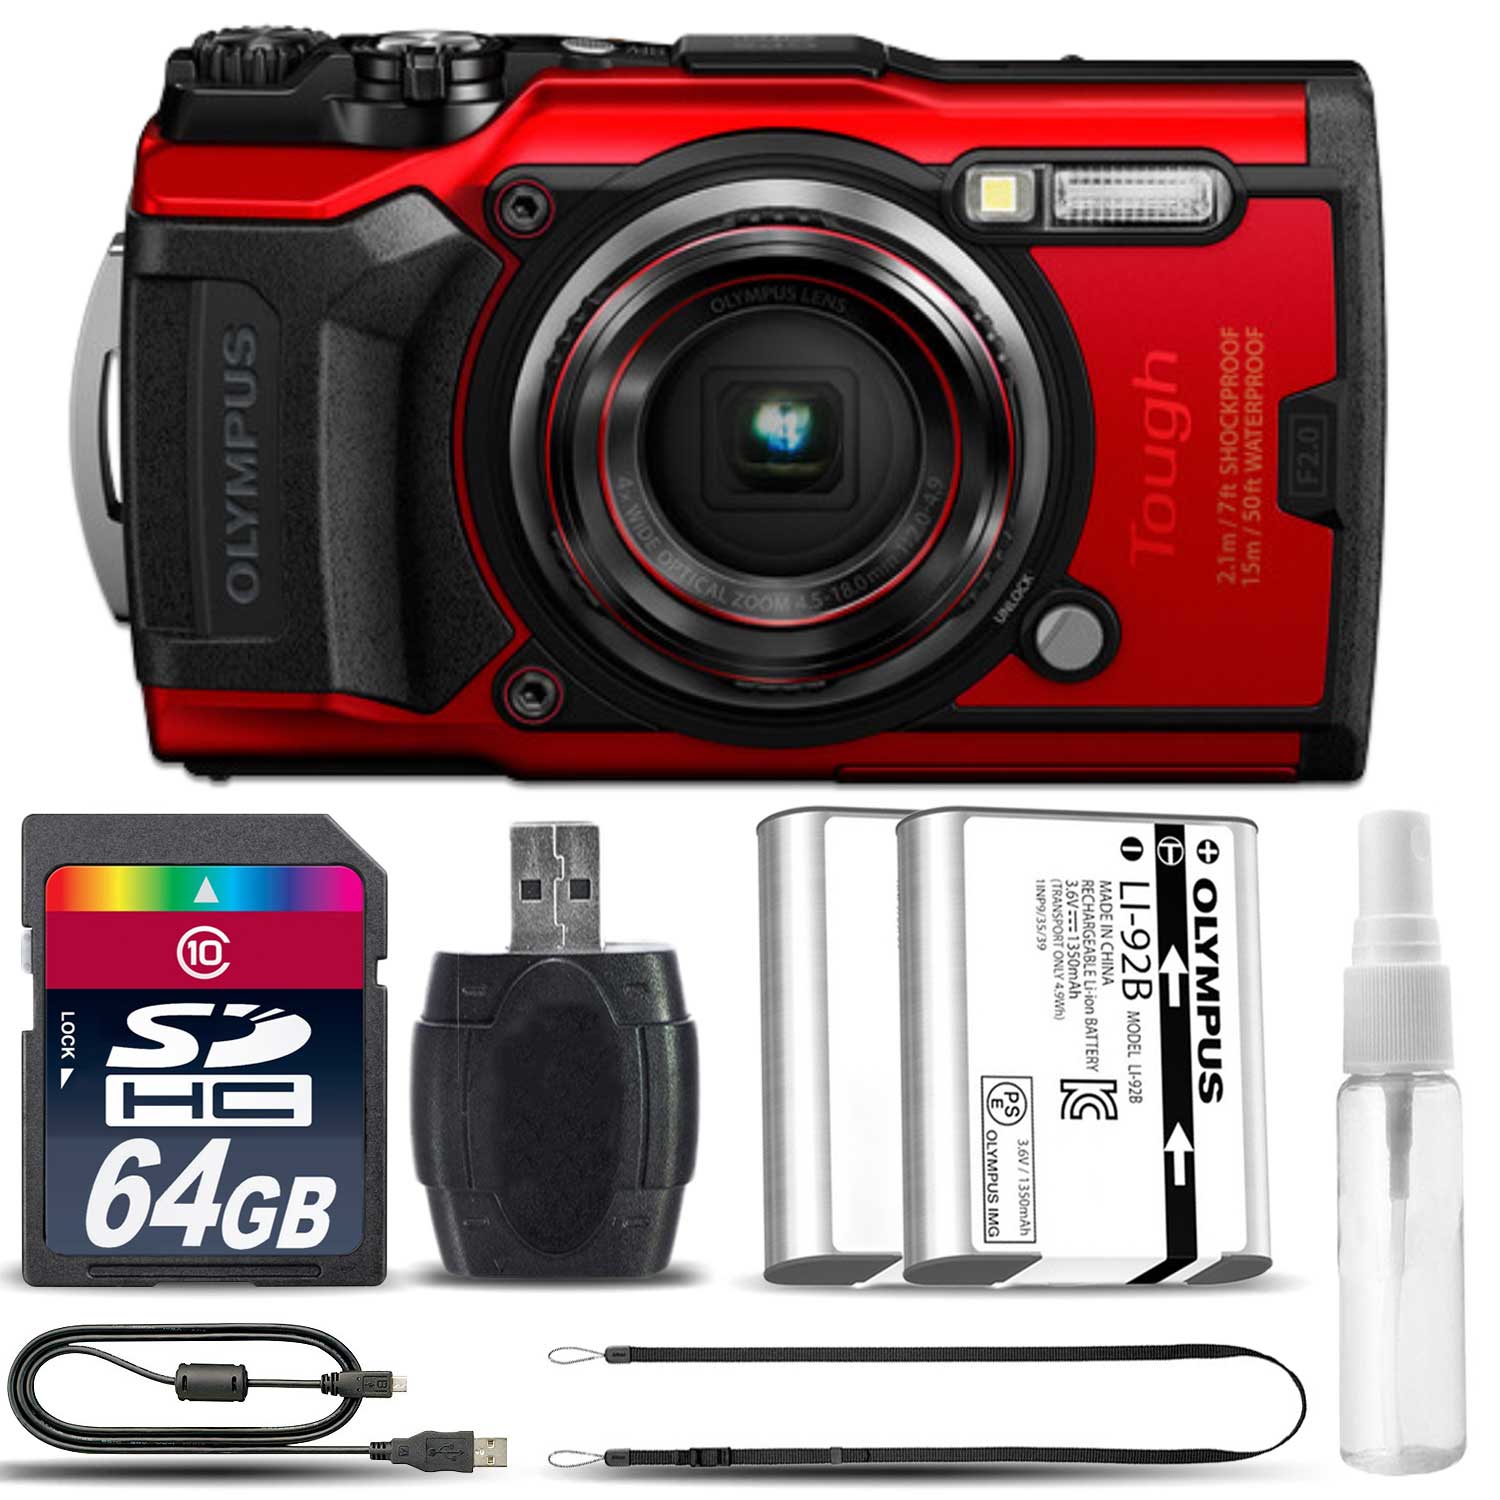 TOUGH TG-6 Digital Waterproof Camera (Red) + Extra Battery - 64GB Kit *FREE SHIPPING*